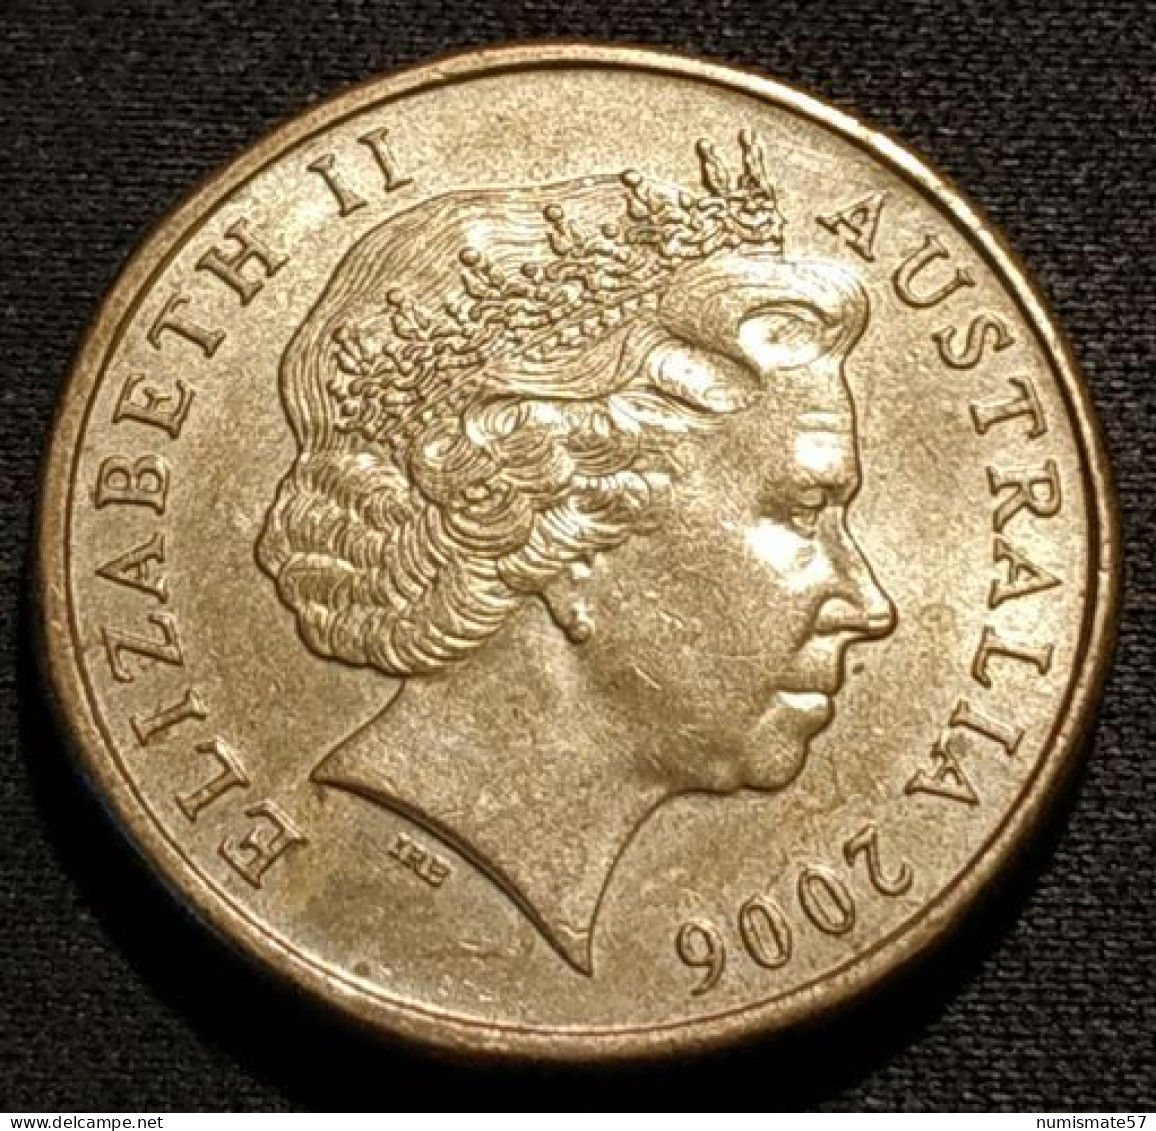 AUSTRALIE - AUSTRALIA - 1 DOLLAR 2006 - Elizabeth II - 4e Effigie - KM 489 - Dollar